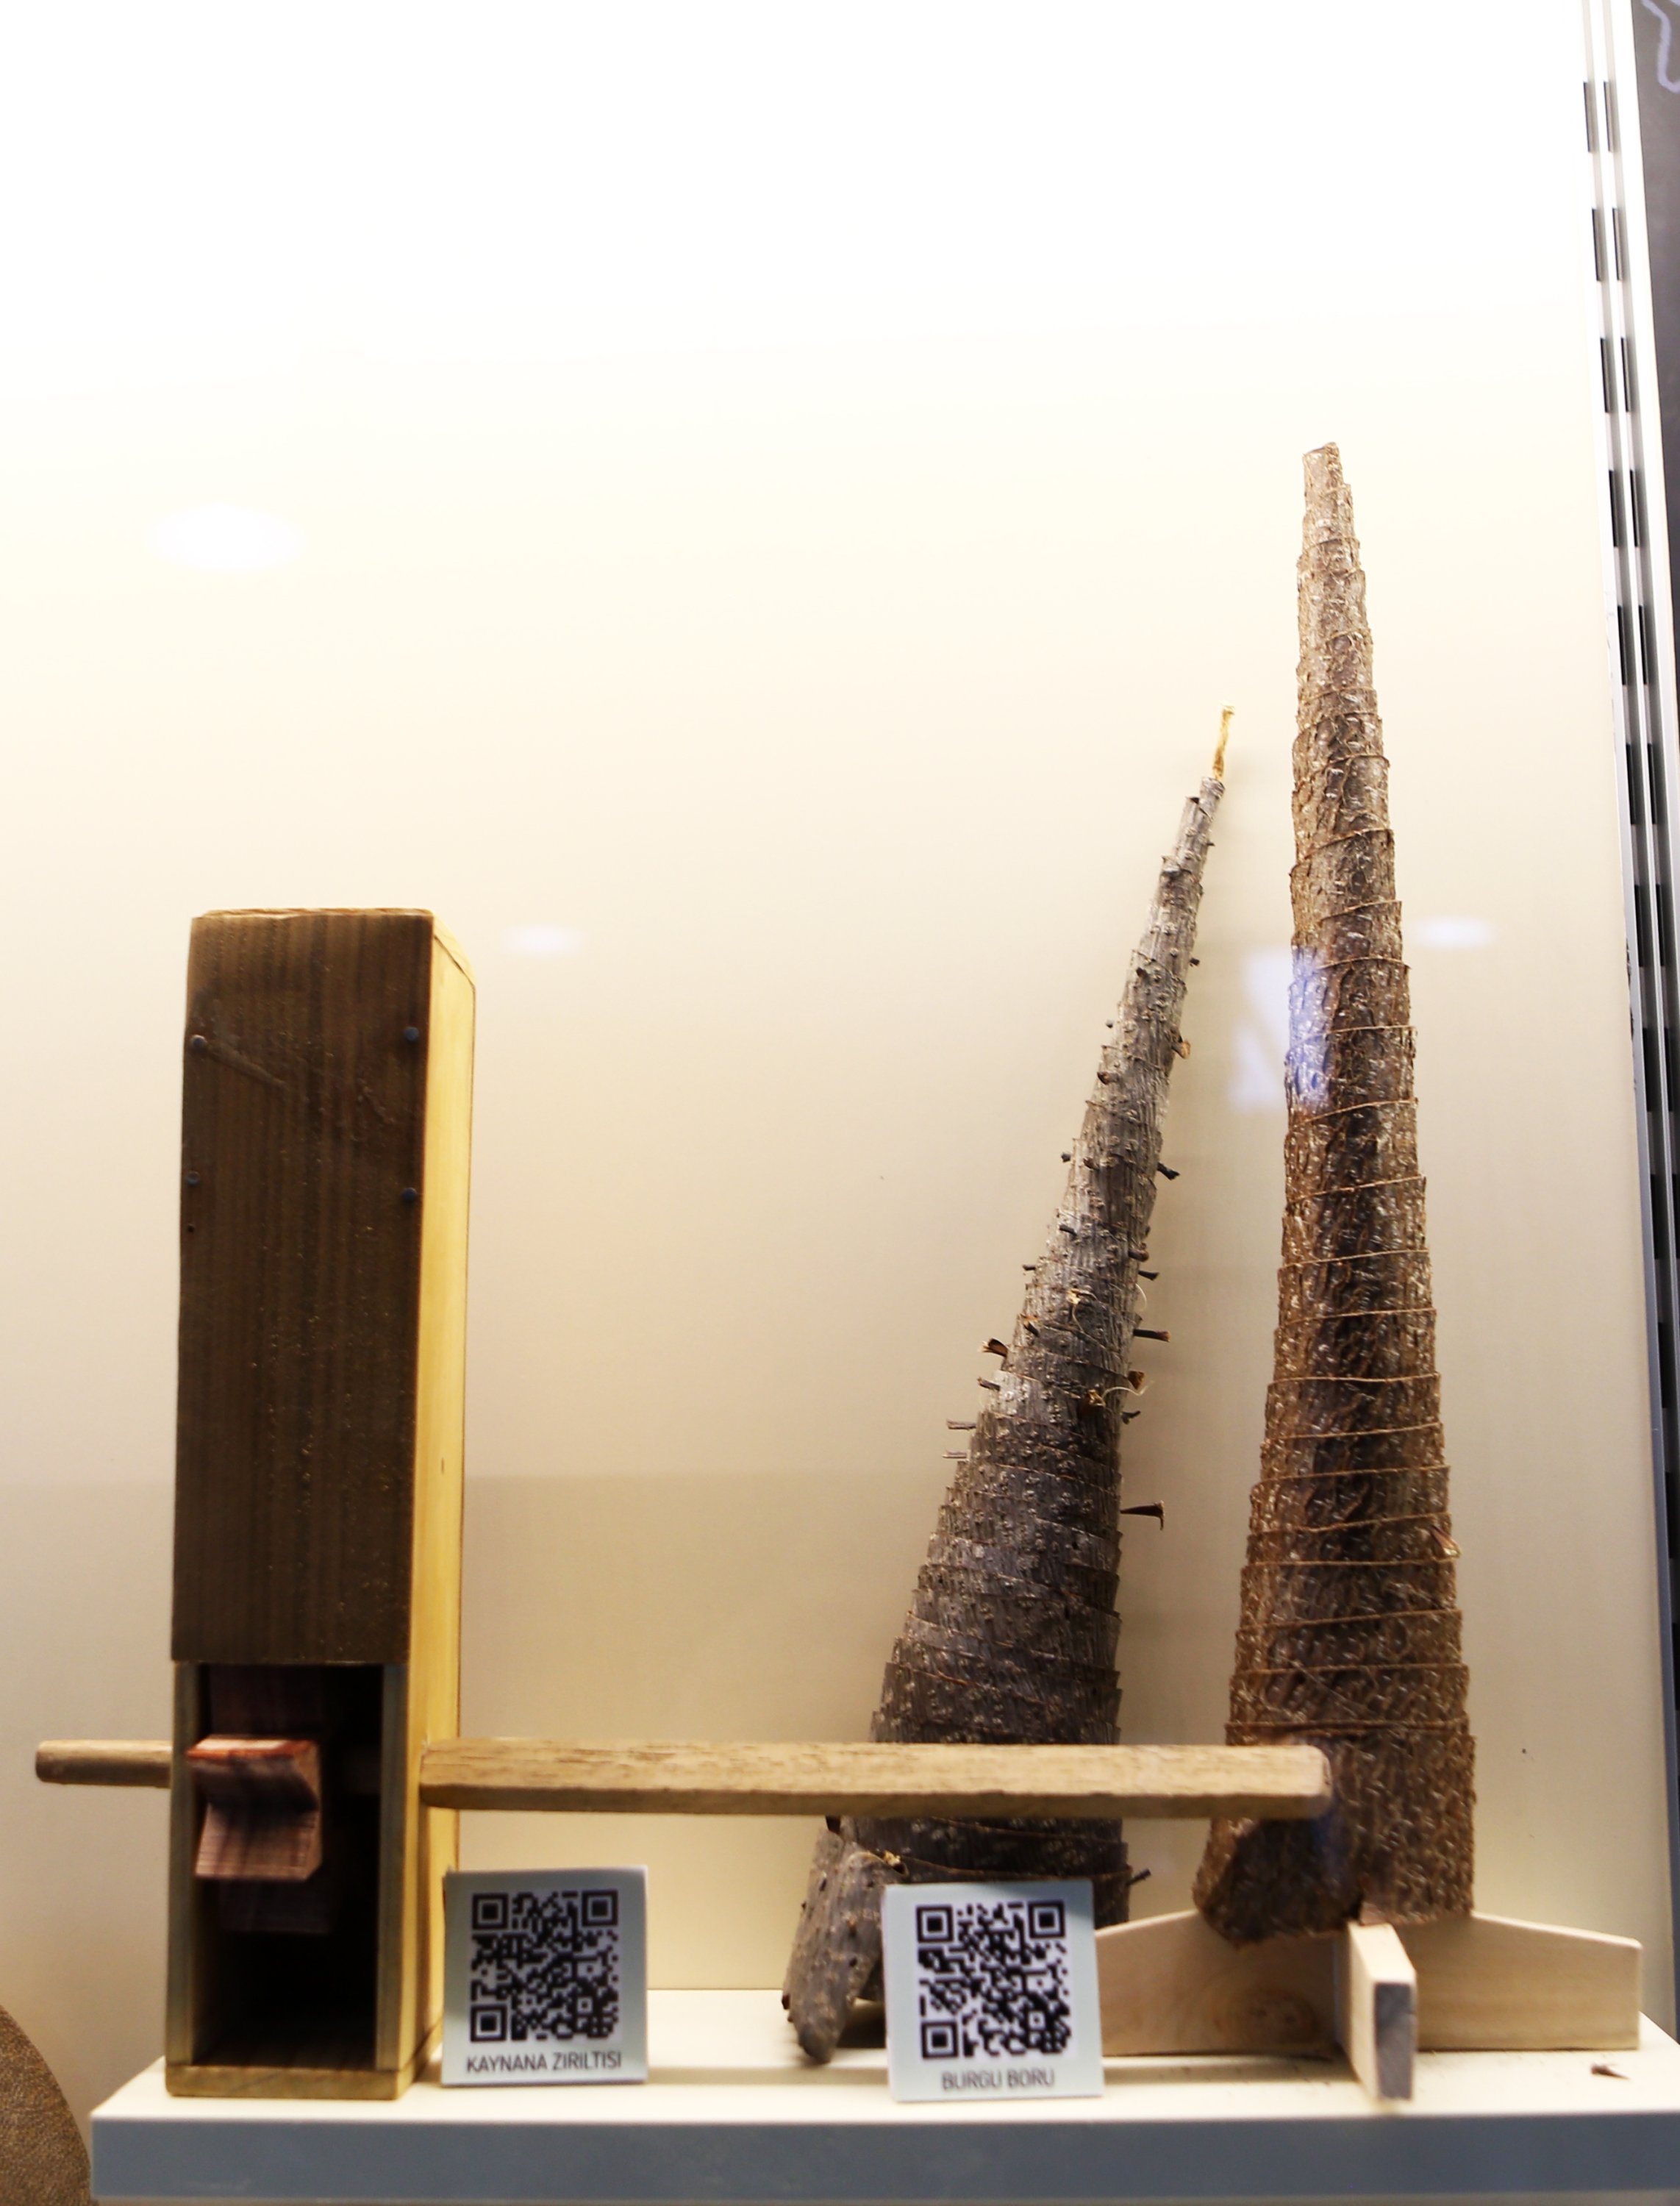 “Kaynana Zırıltısı,” a type of clapper or rattle, is displayed alongside other instruments, Trabzon, northern Turkey, Jan. 27, 2021. (AA Photo)